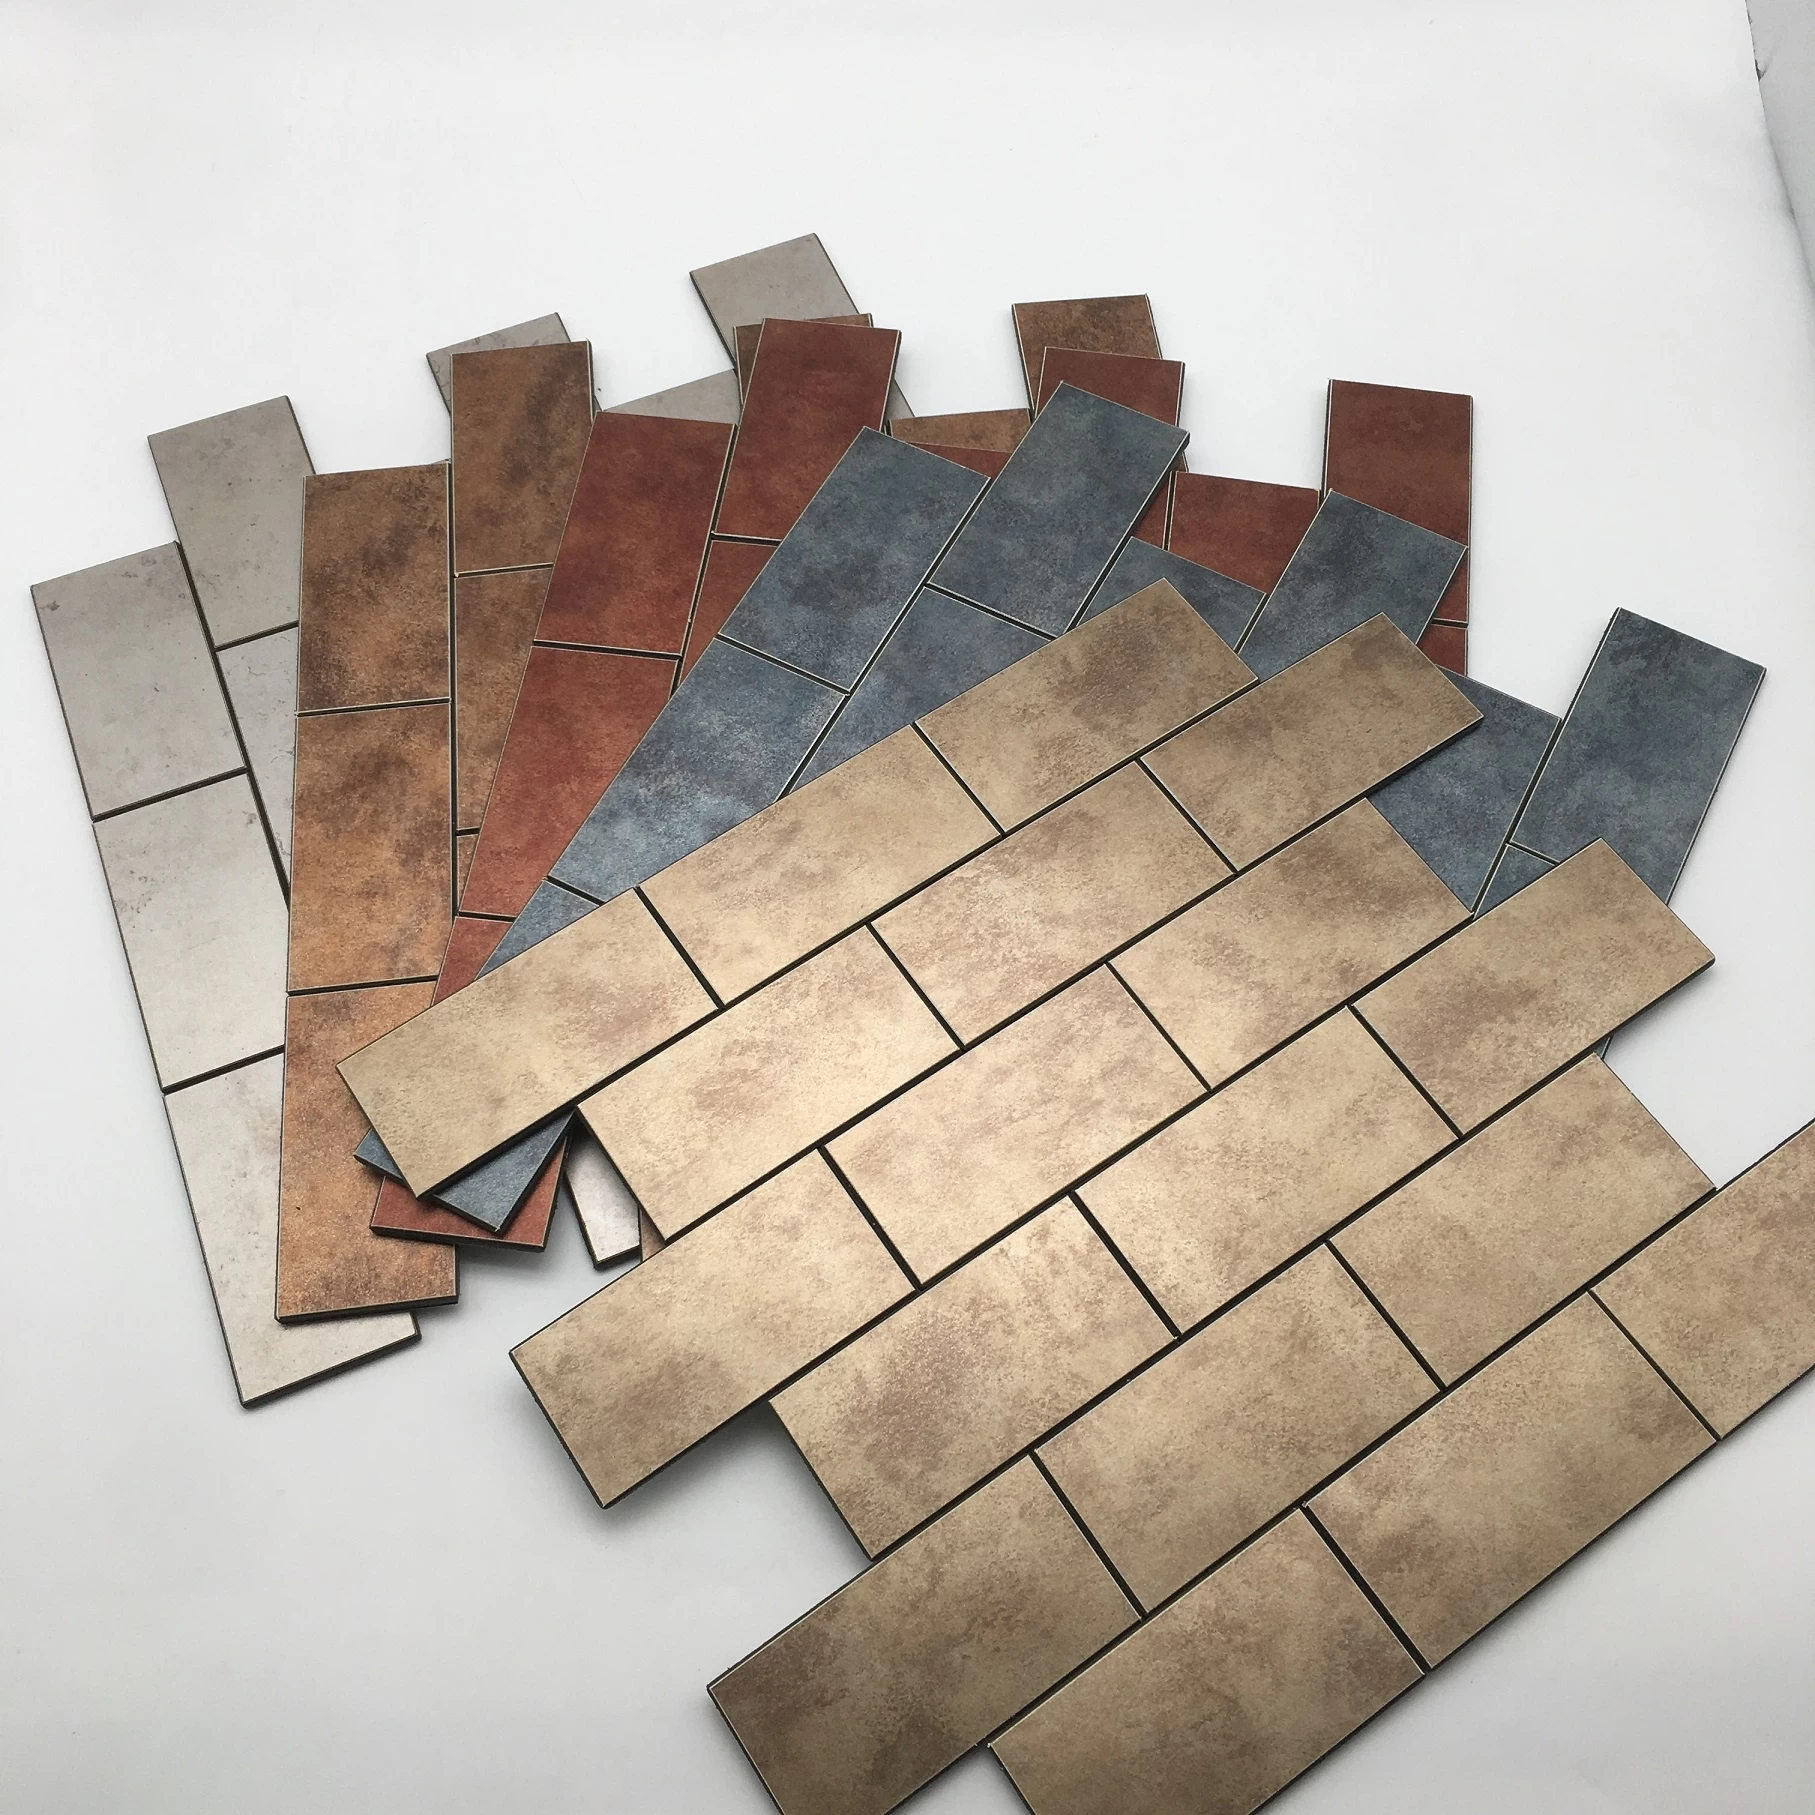 2021 Self Adhesive Wall Tile 12inch Oil-resistant Tiles Waterproof Peel and Stick Wall Tiles Backsplash